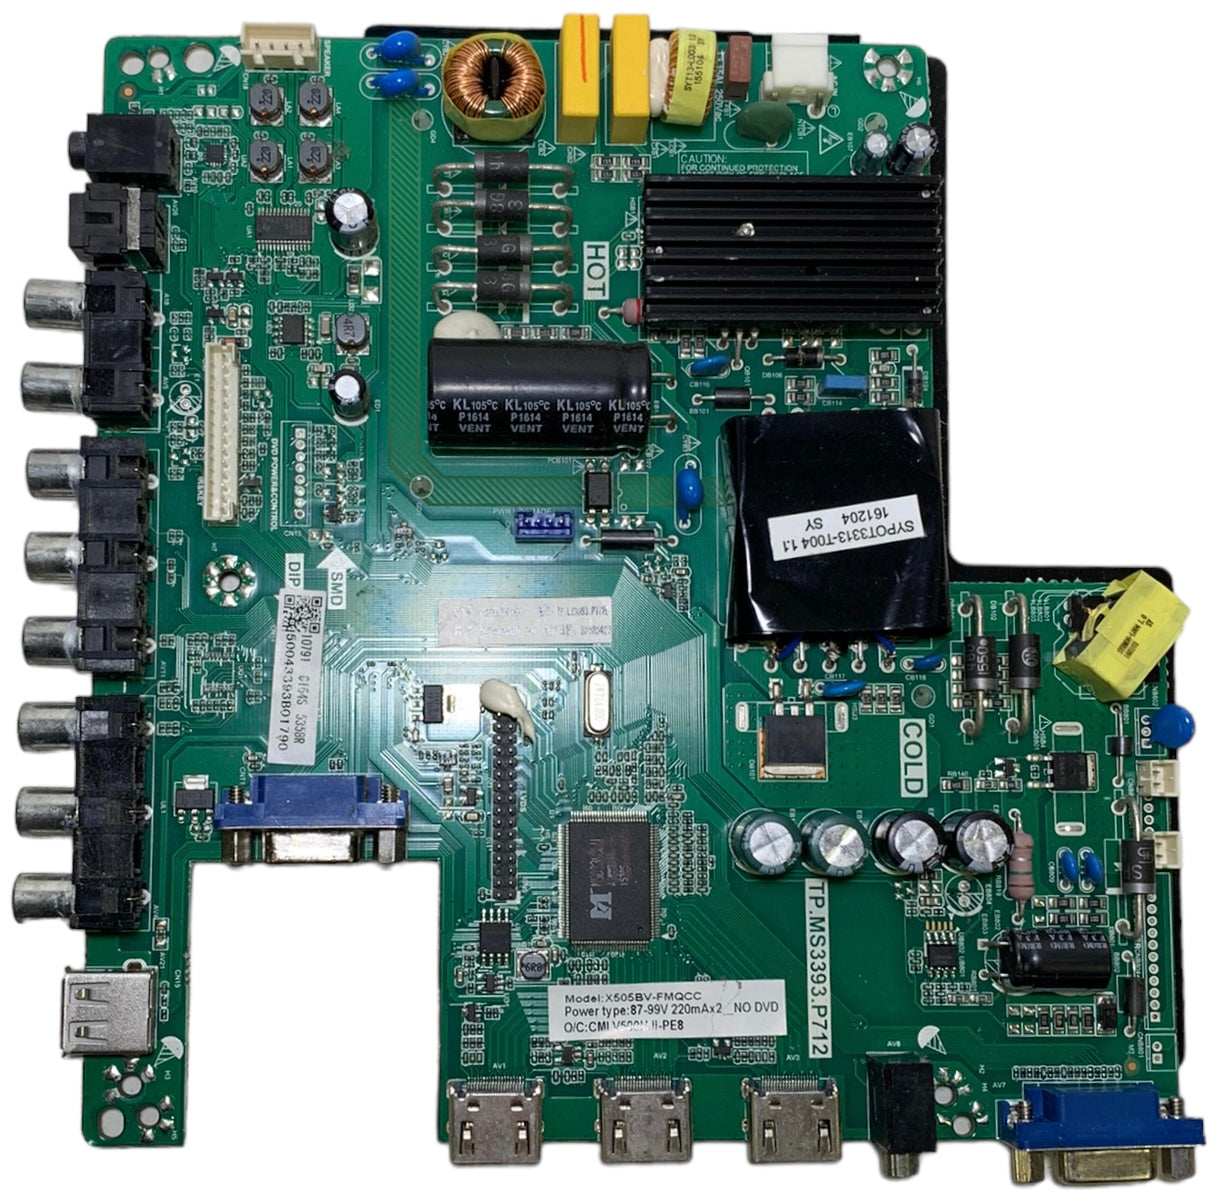 Sceptre 50043393B01790 Main Board / Power Supply for X505BV-FMQCC